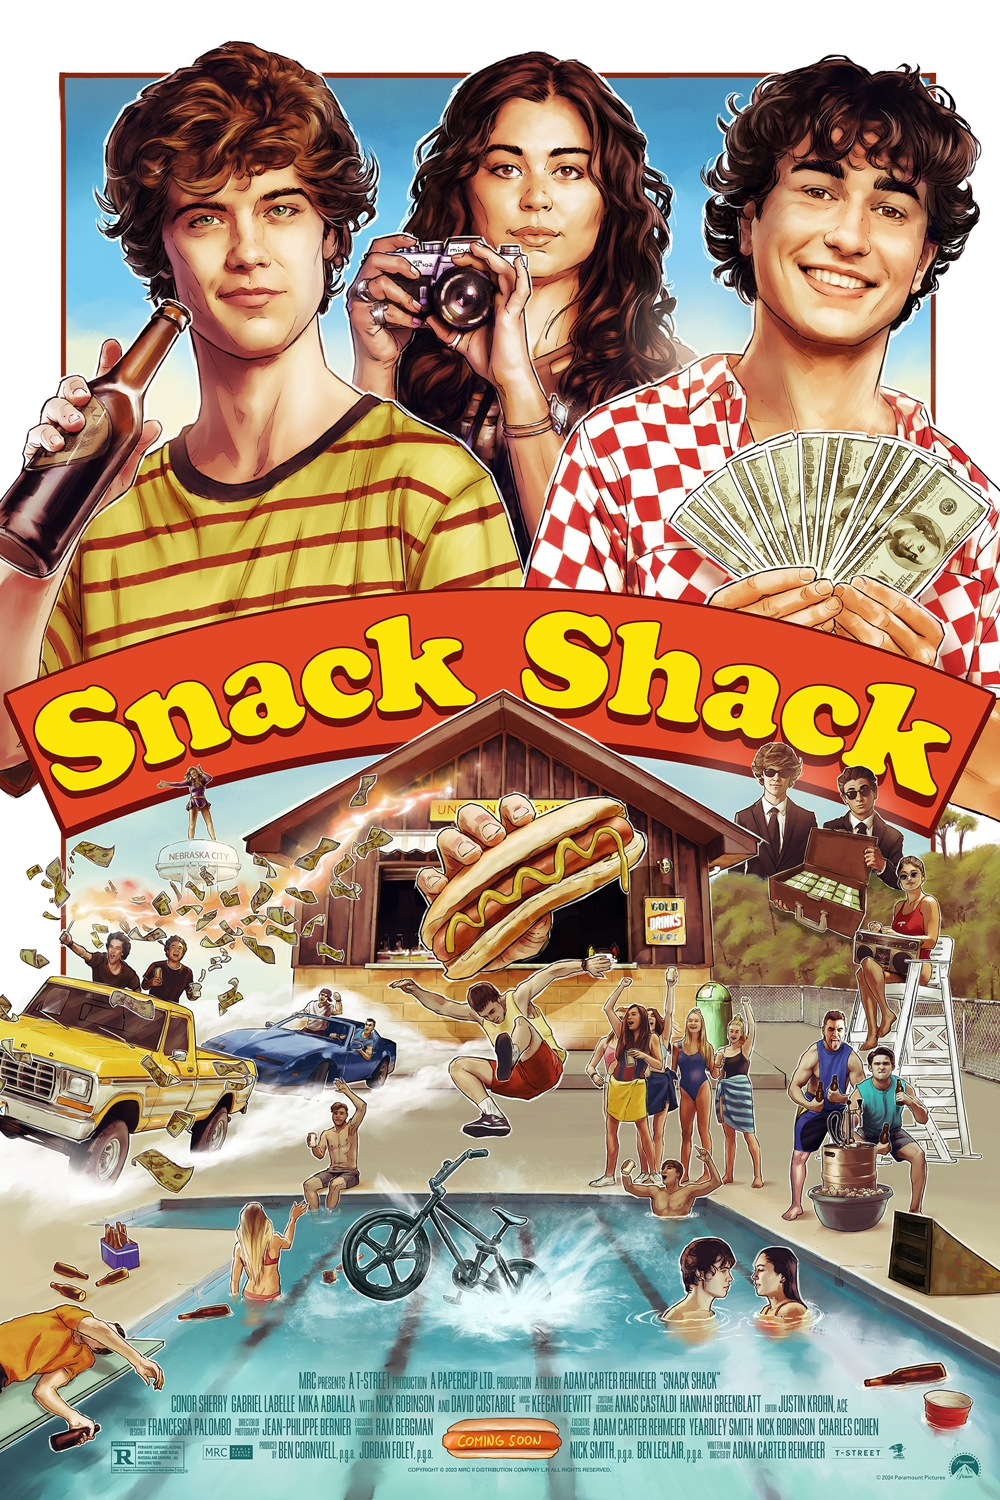 Snack Shack Movie Times | Showbiz Kingwood